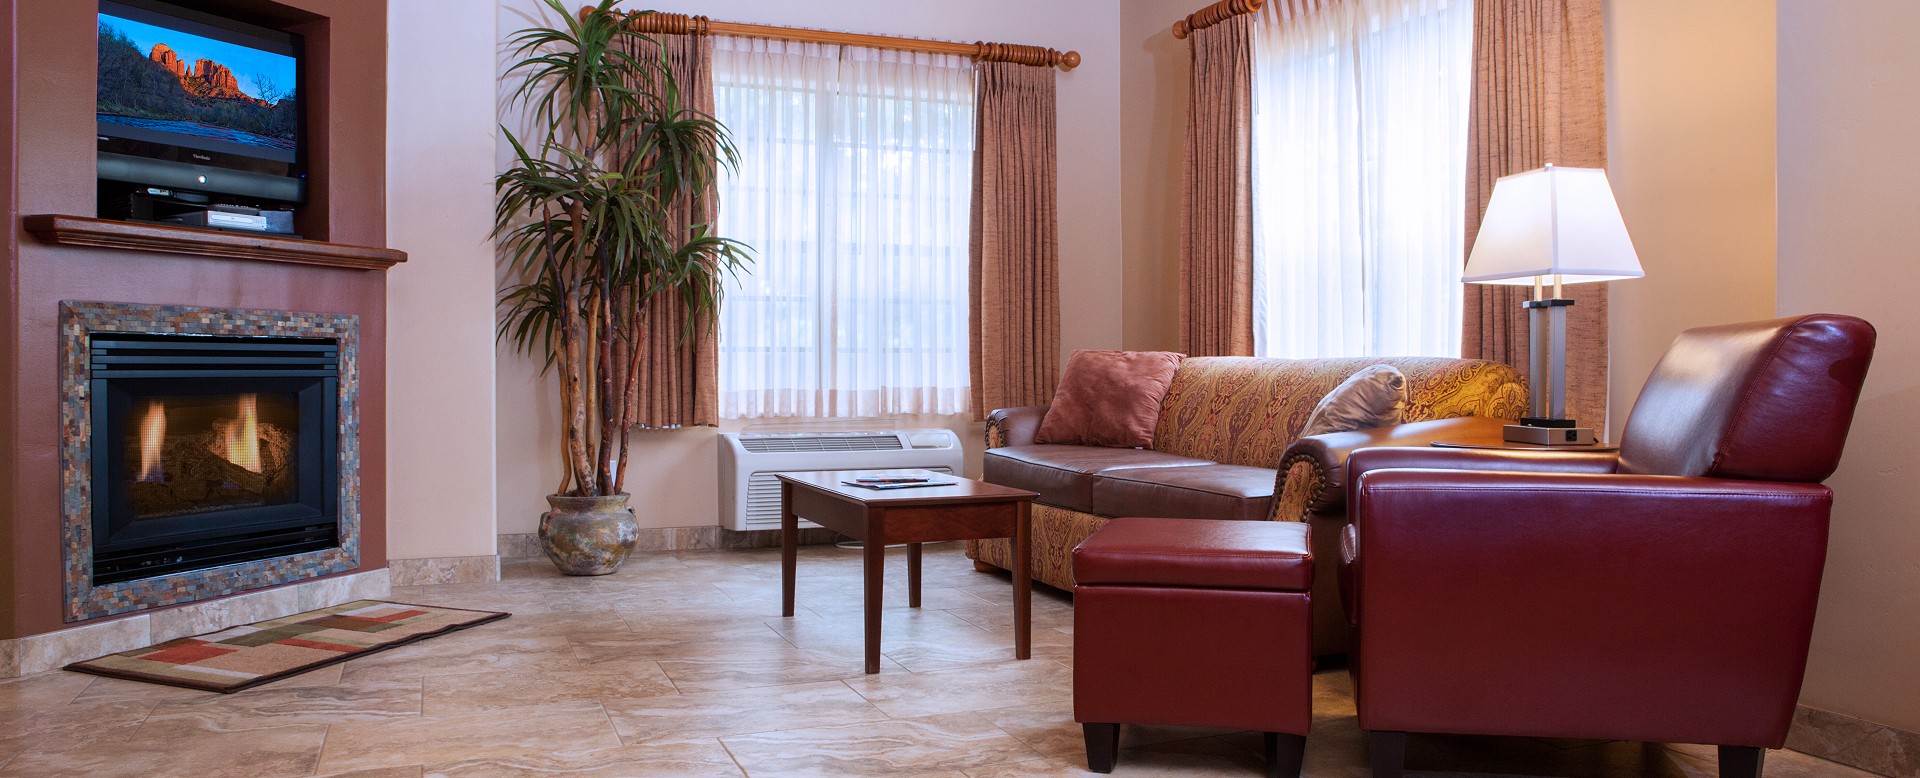 Sedona Real Inn & Suites - suite parlor